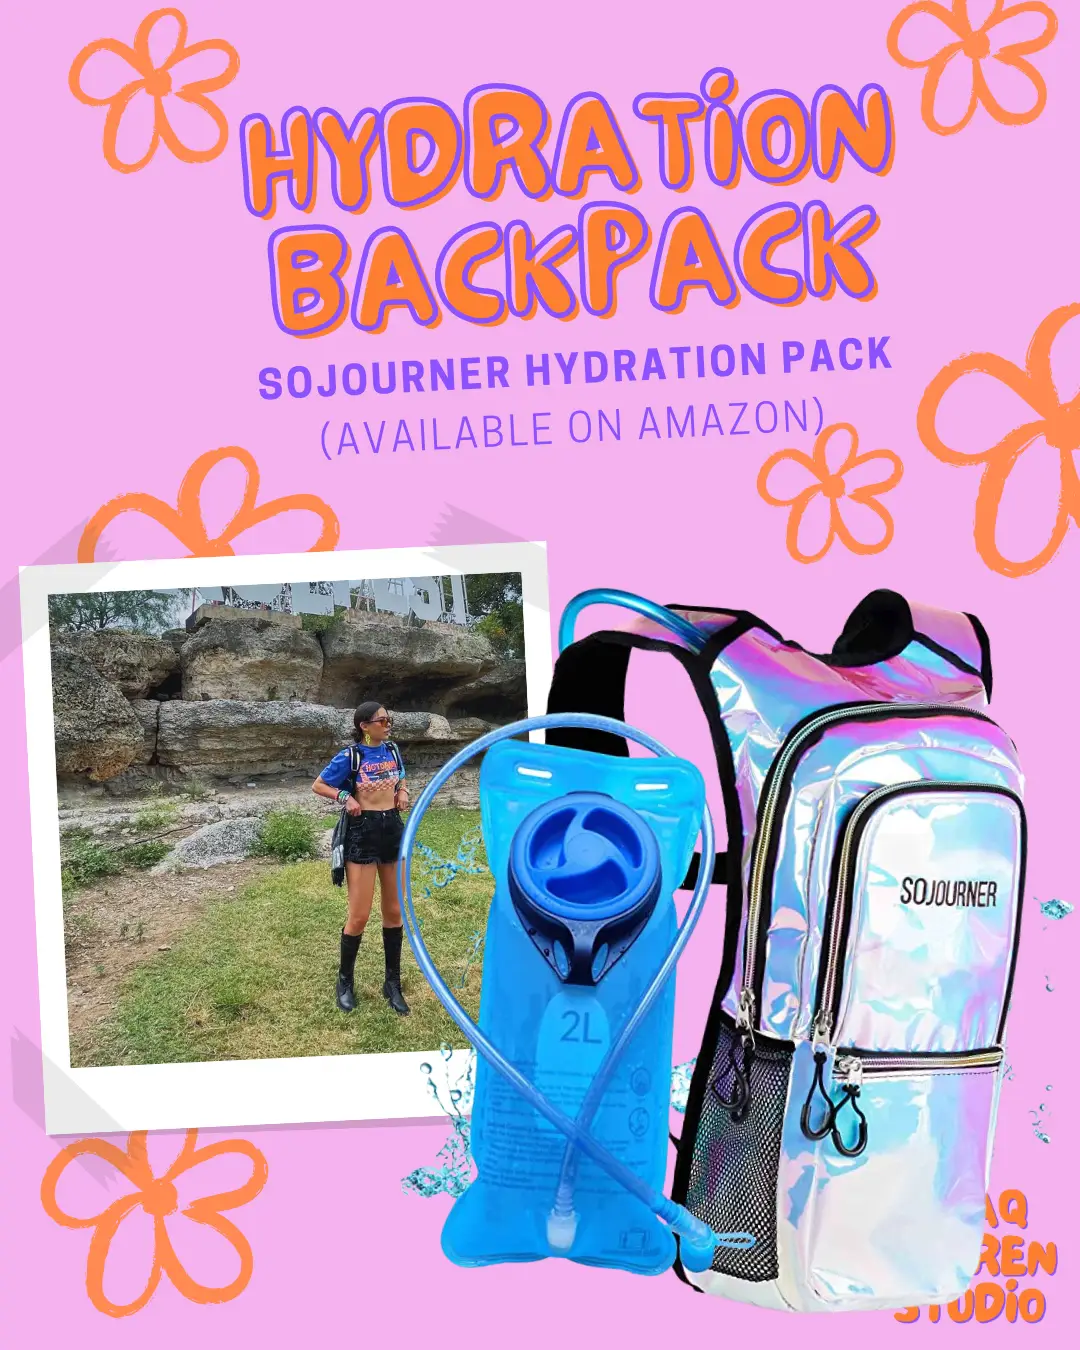 Sojourner Hydration Pack Backpack 2L Water Bladder Included